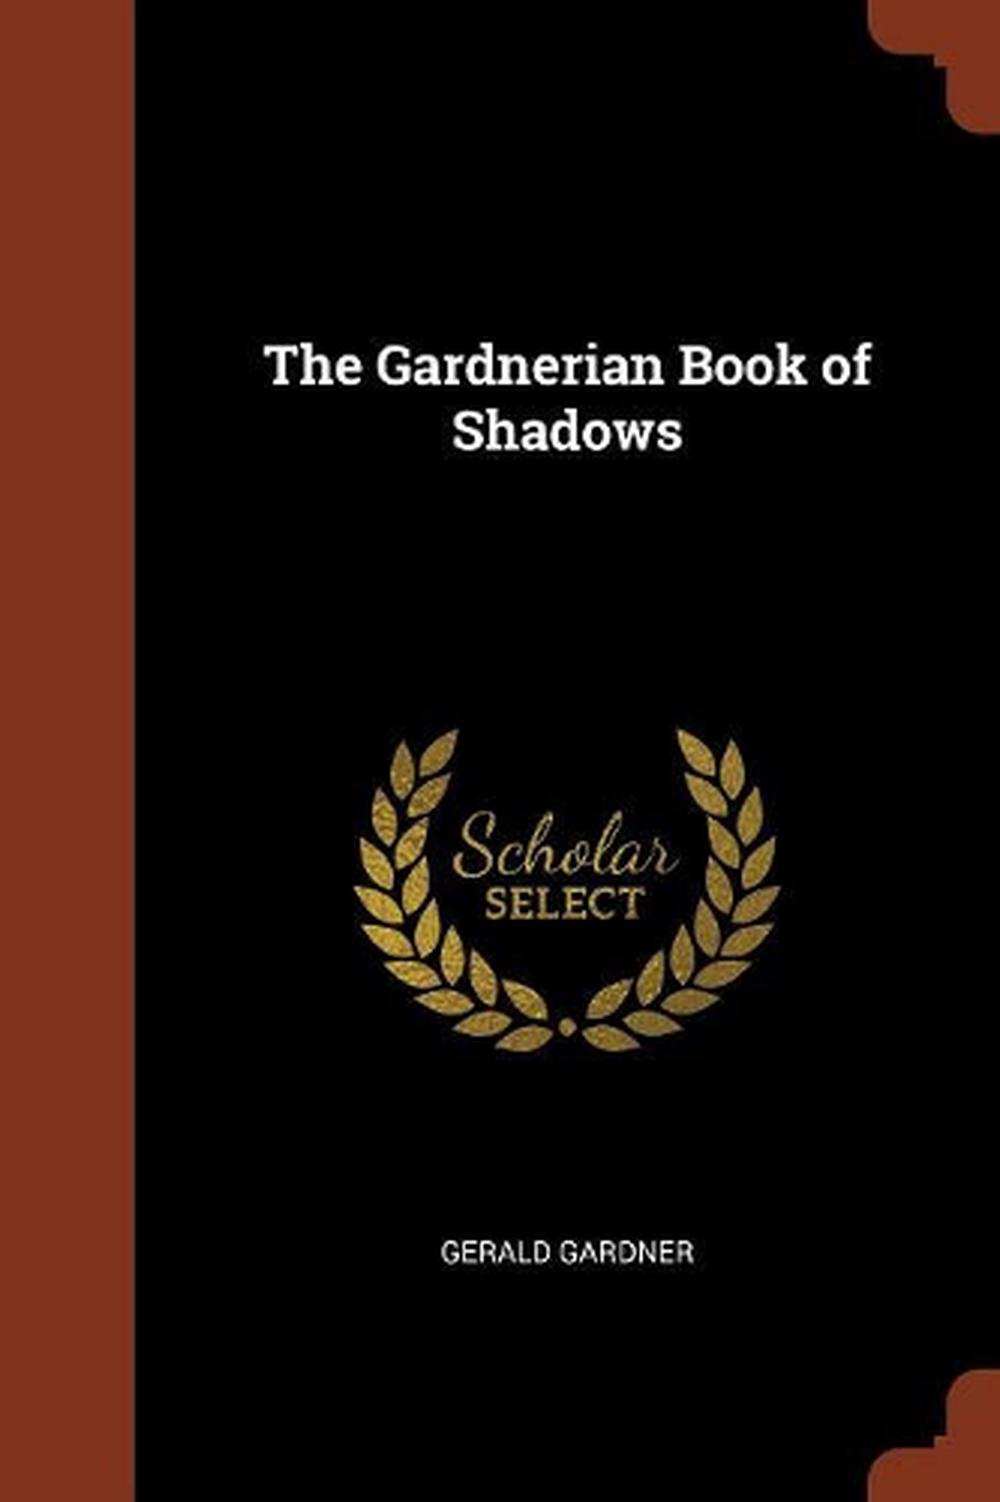 book of shadows by gerald gardner pdf